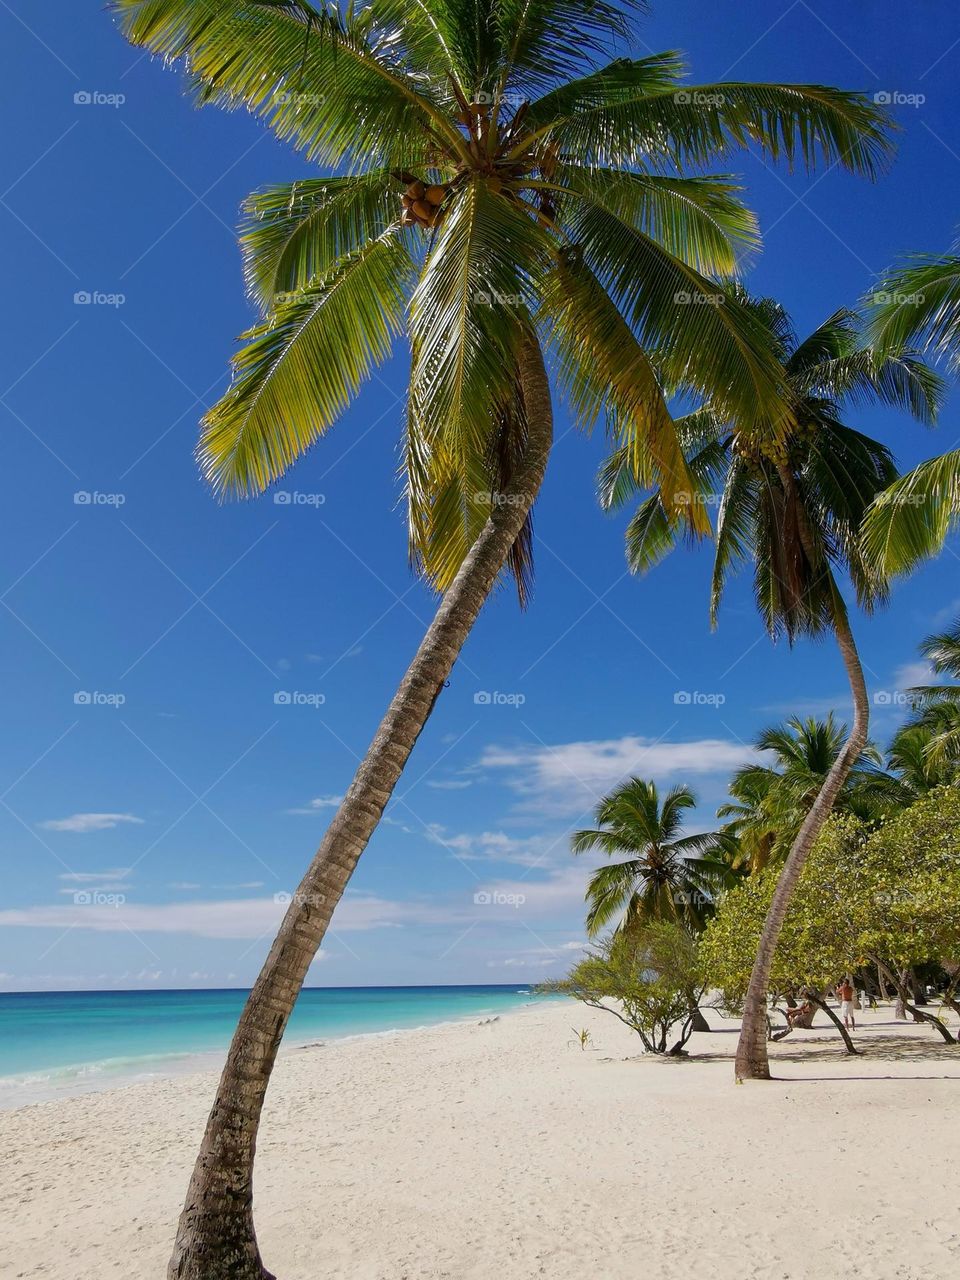 Travel to the Dominican Republic. Holiday in Dominican Republic. Seashore. Beautiful scenery. Seascape. Palm trees. Saona Island.